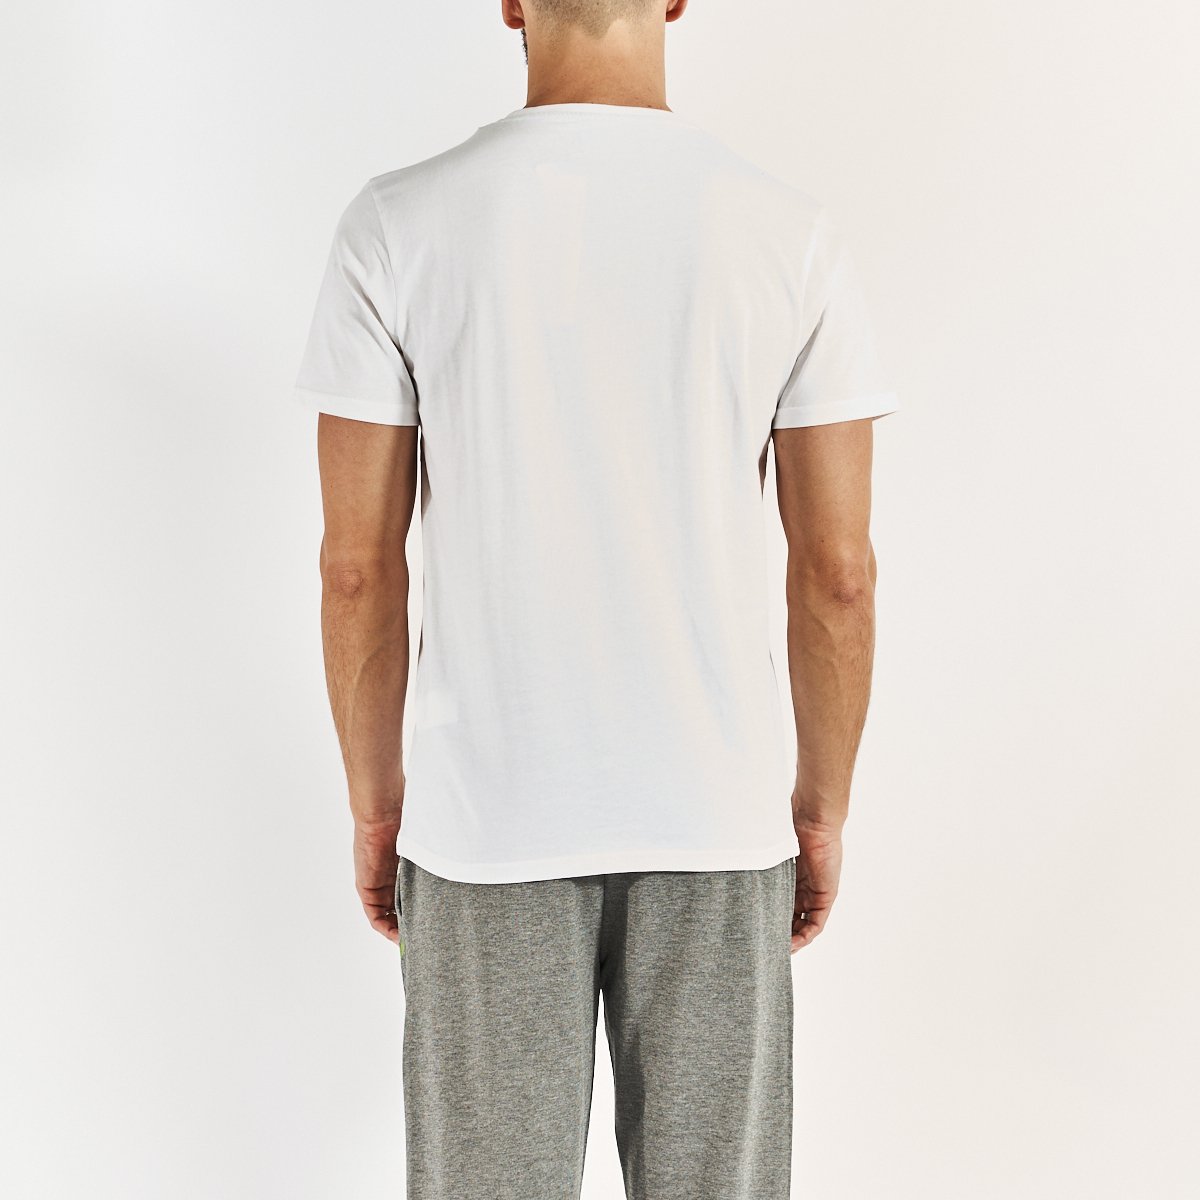 Camiseta Gibbs hombre blanco - Imagen 3